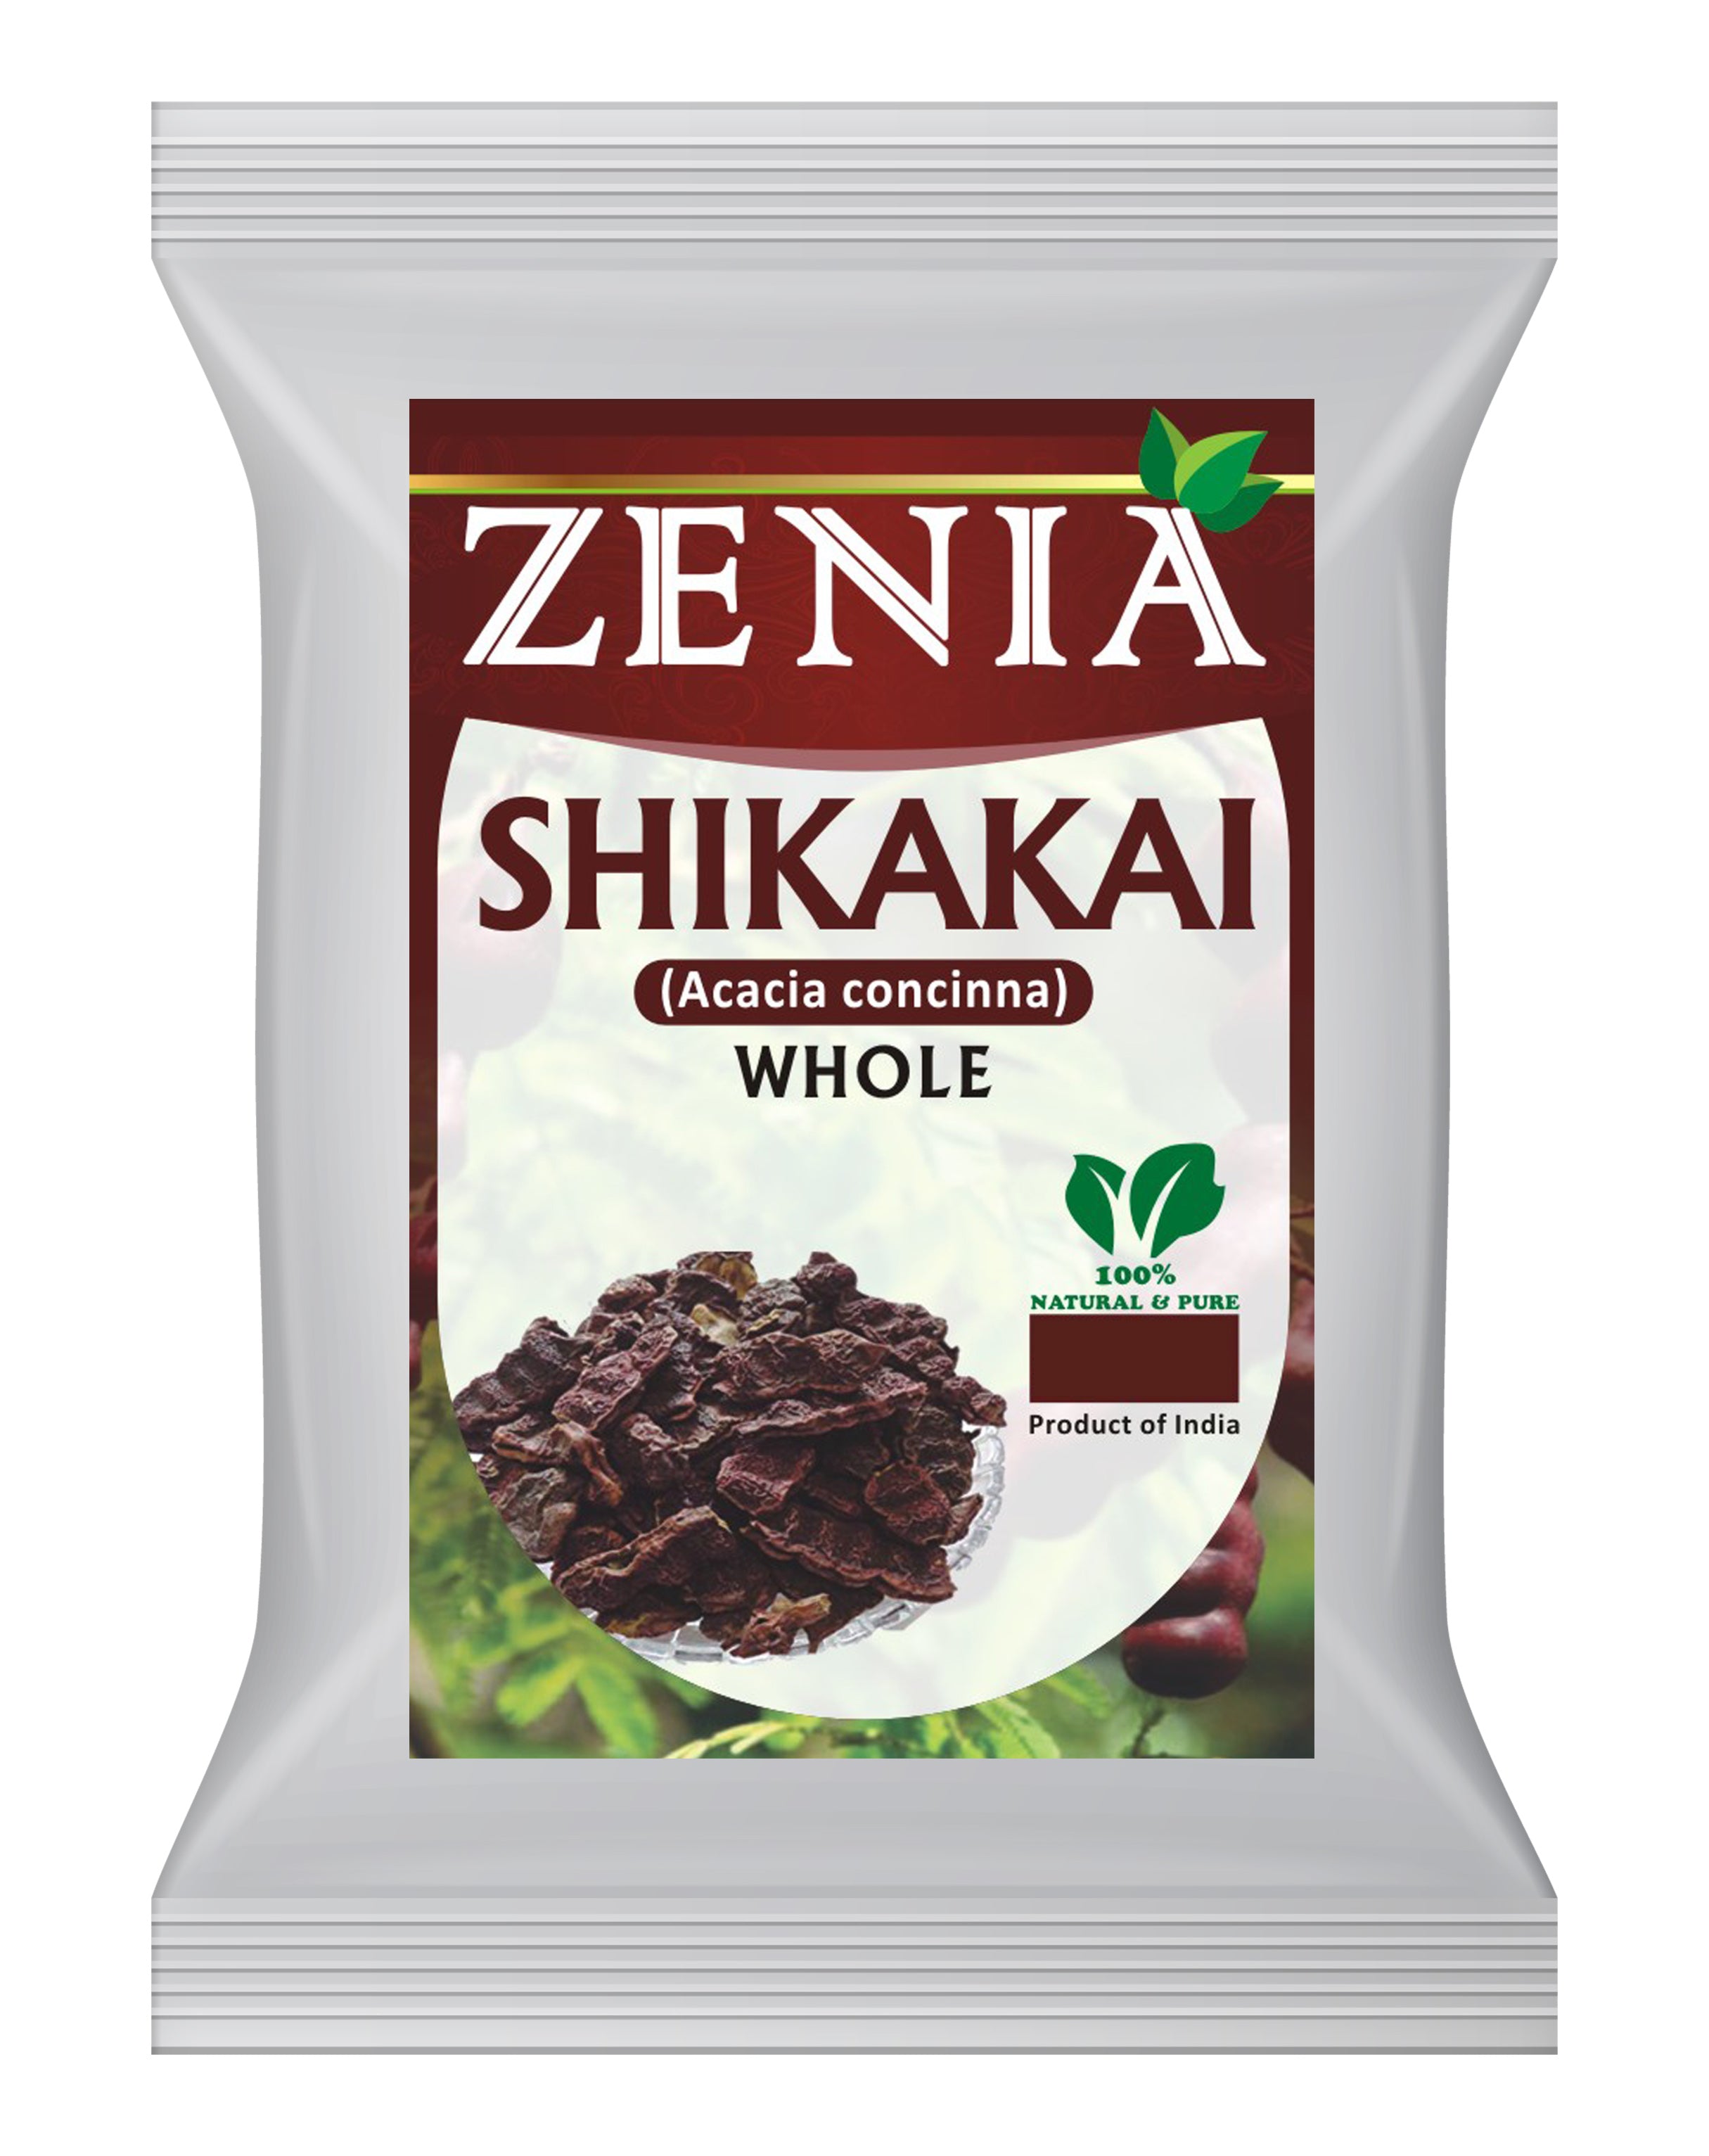 Zenia Whole Shikakai